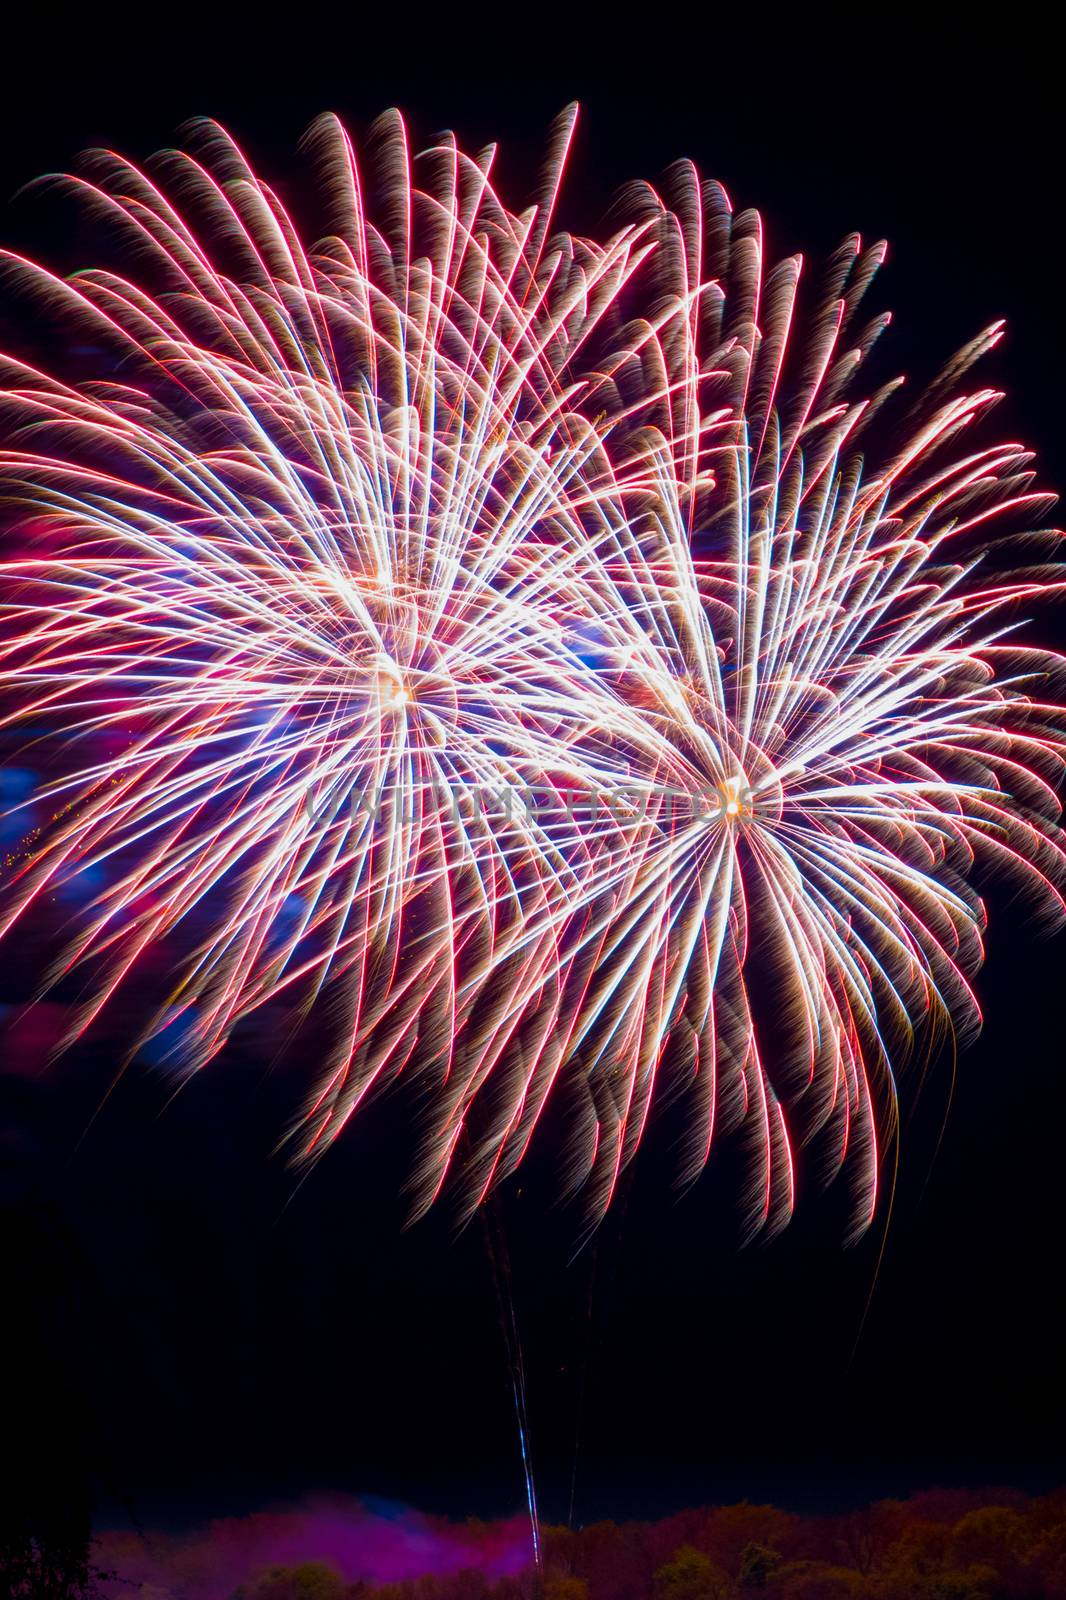 Firework fireworks celebration red blue white tails by MXW_Stock